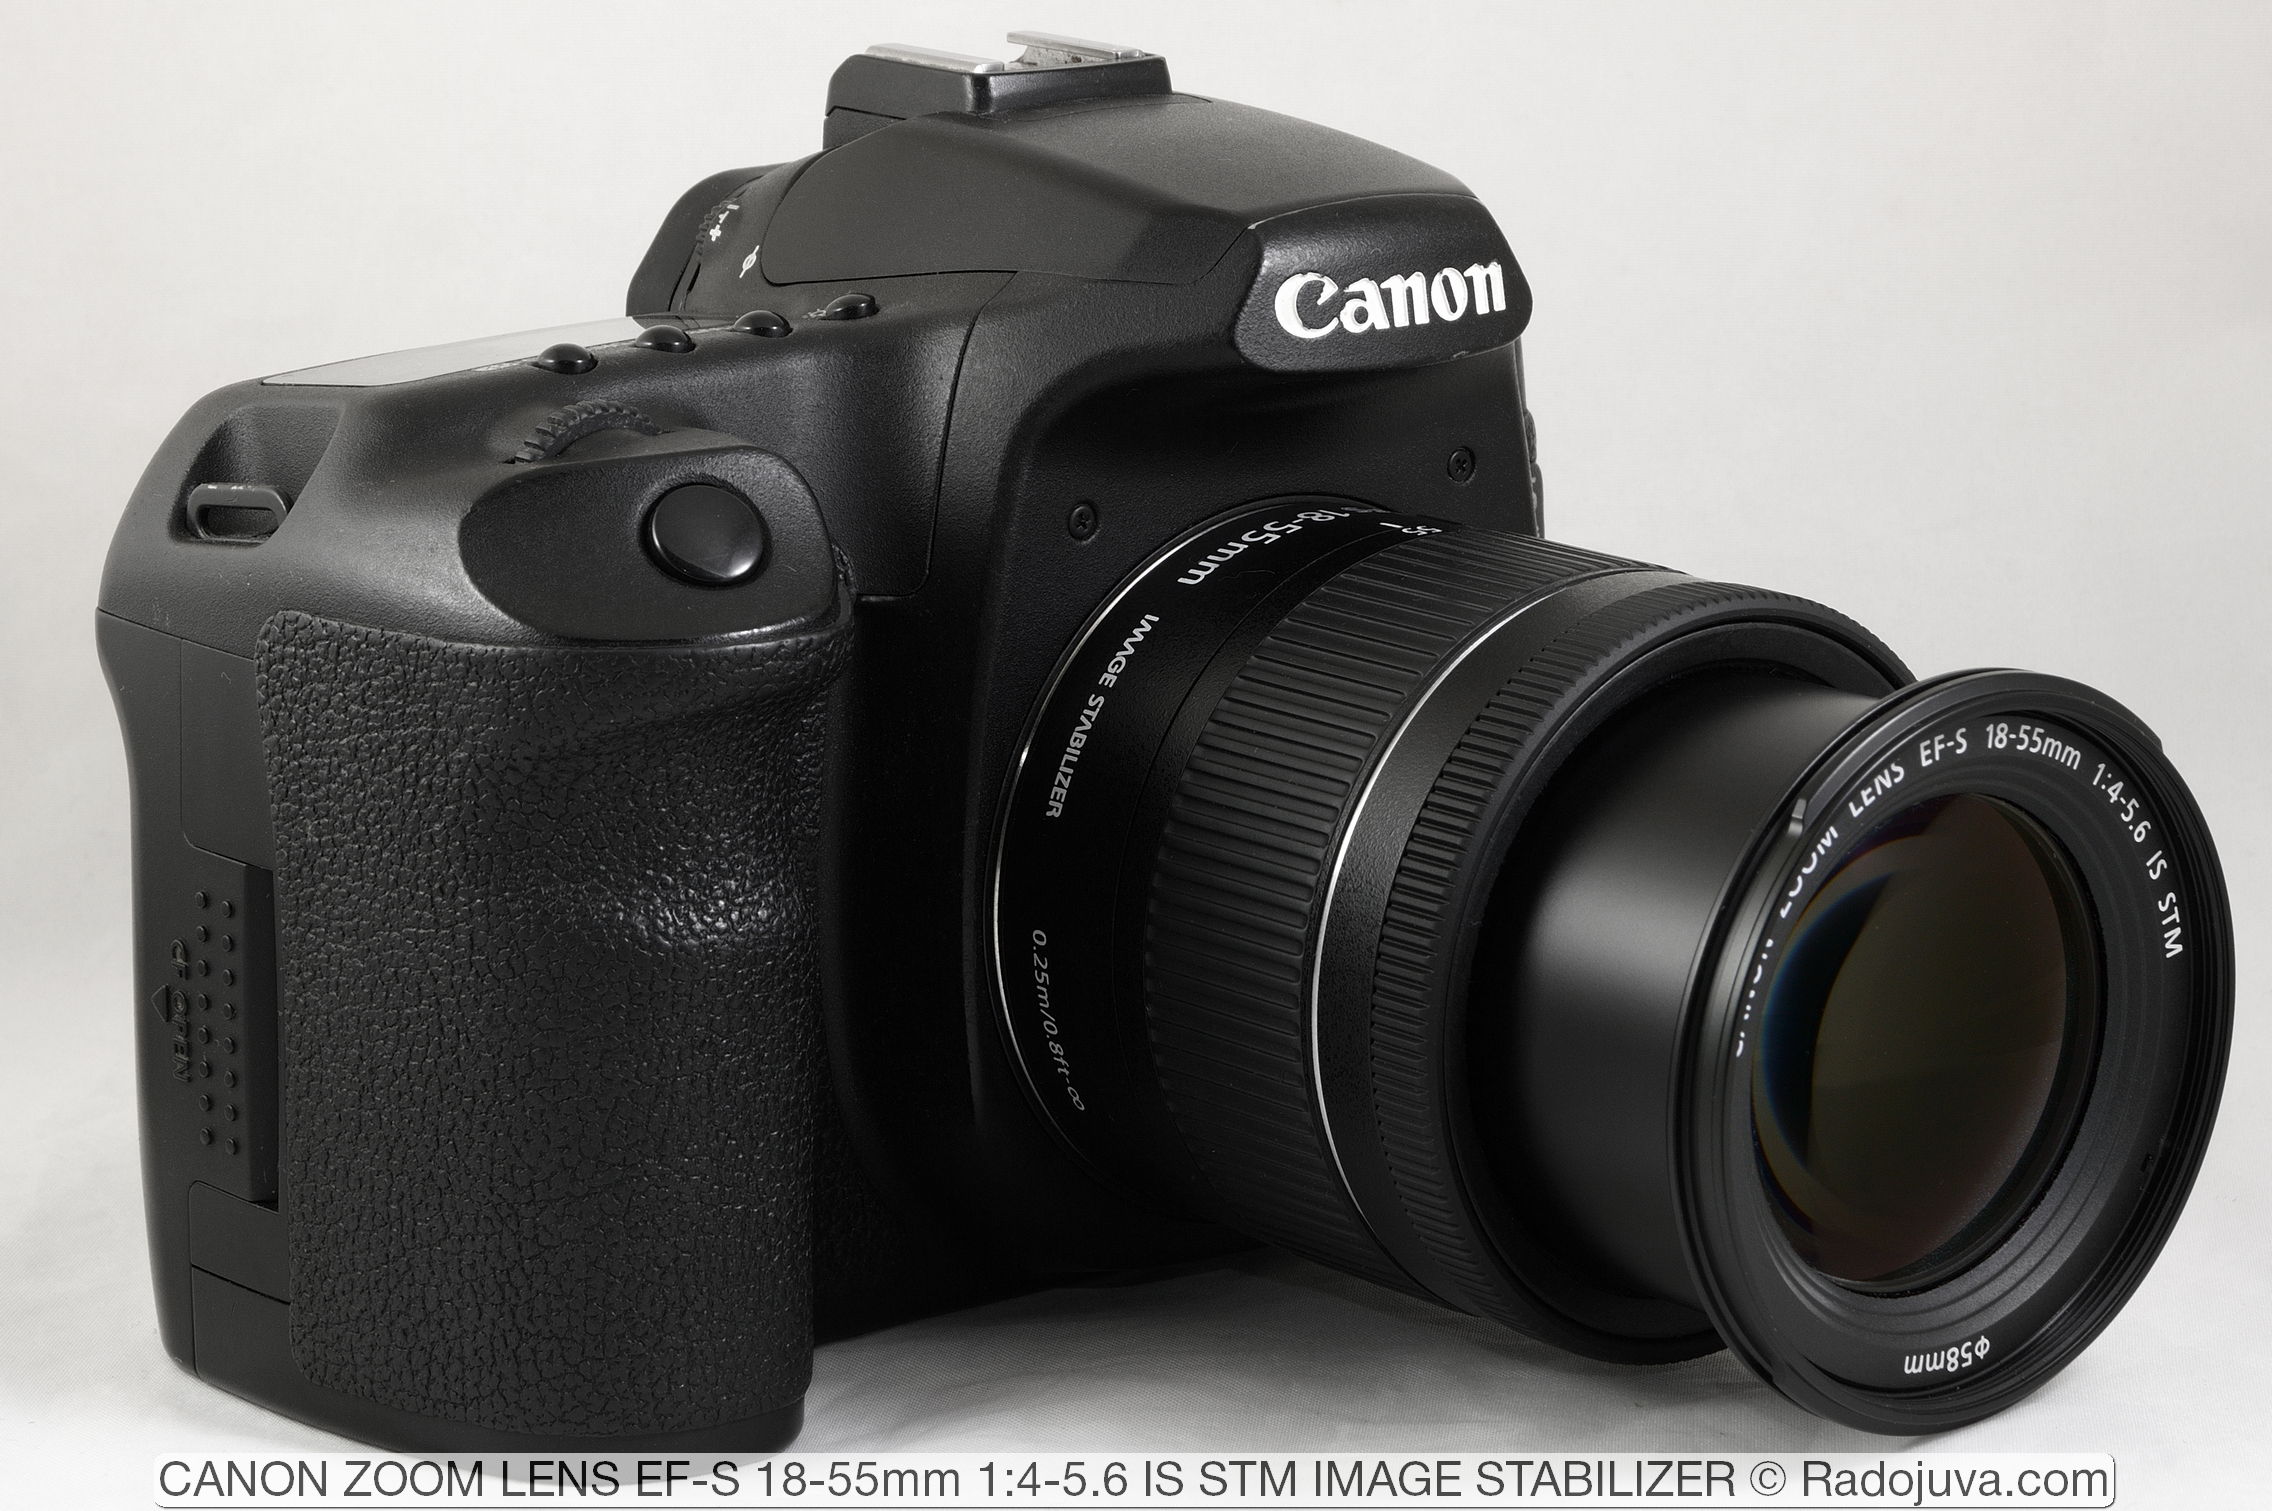 Canon Zoom Lens EF-S 18-55mm 1:4-5.6 IS STM Image Stabilizer